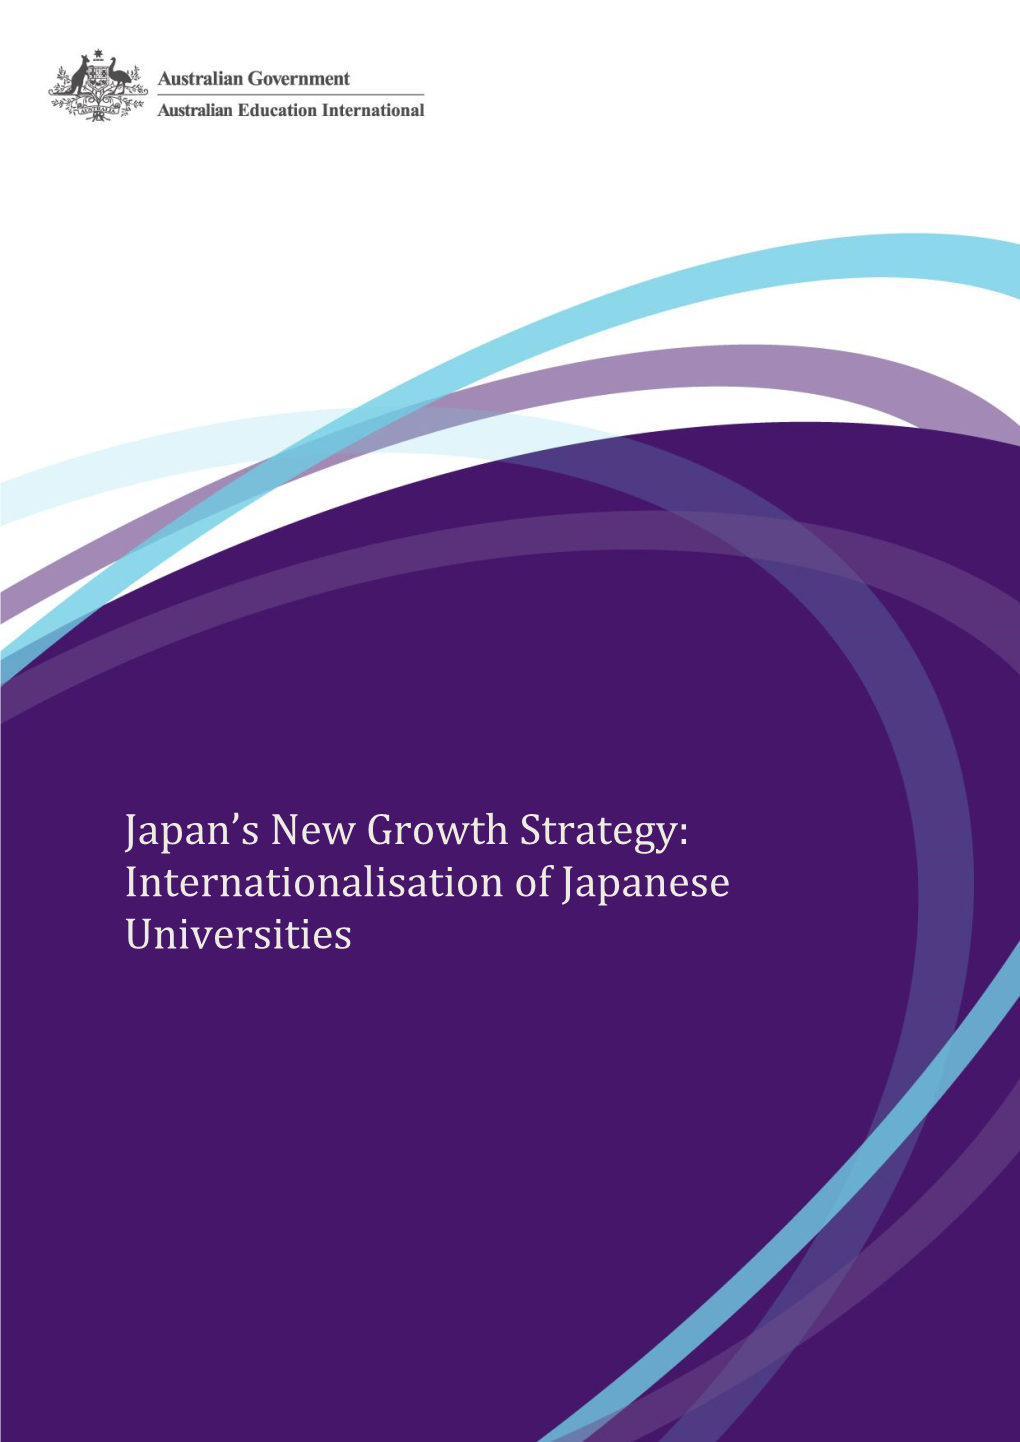 Internationalisation of Japanese Universities